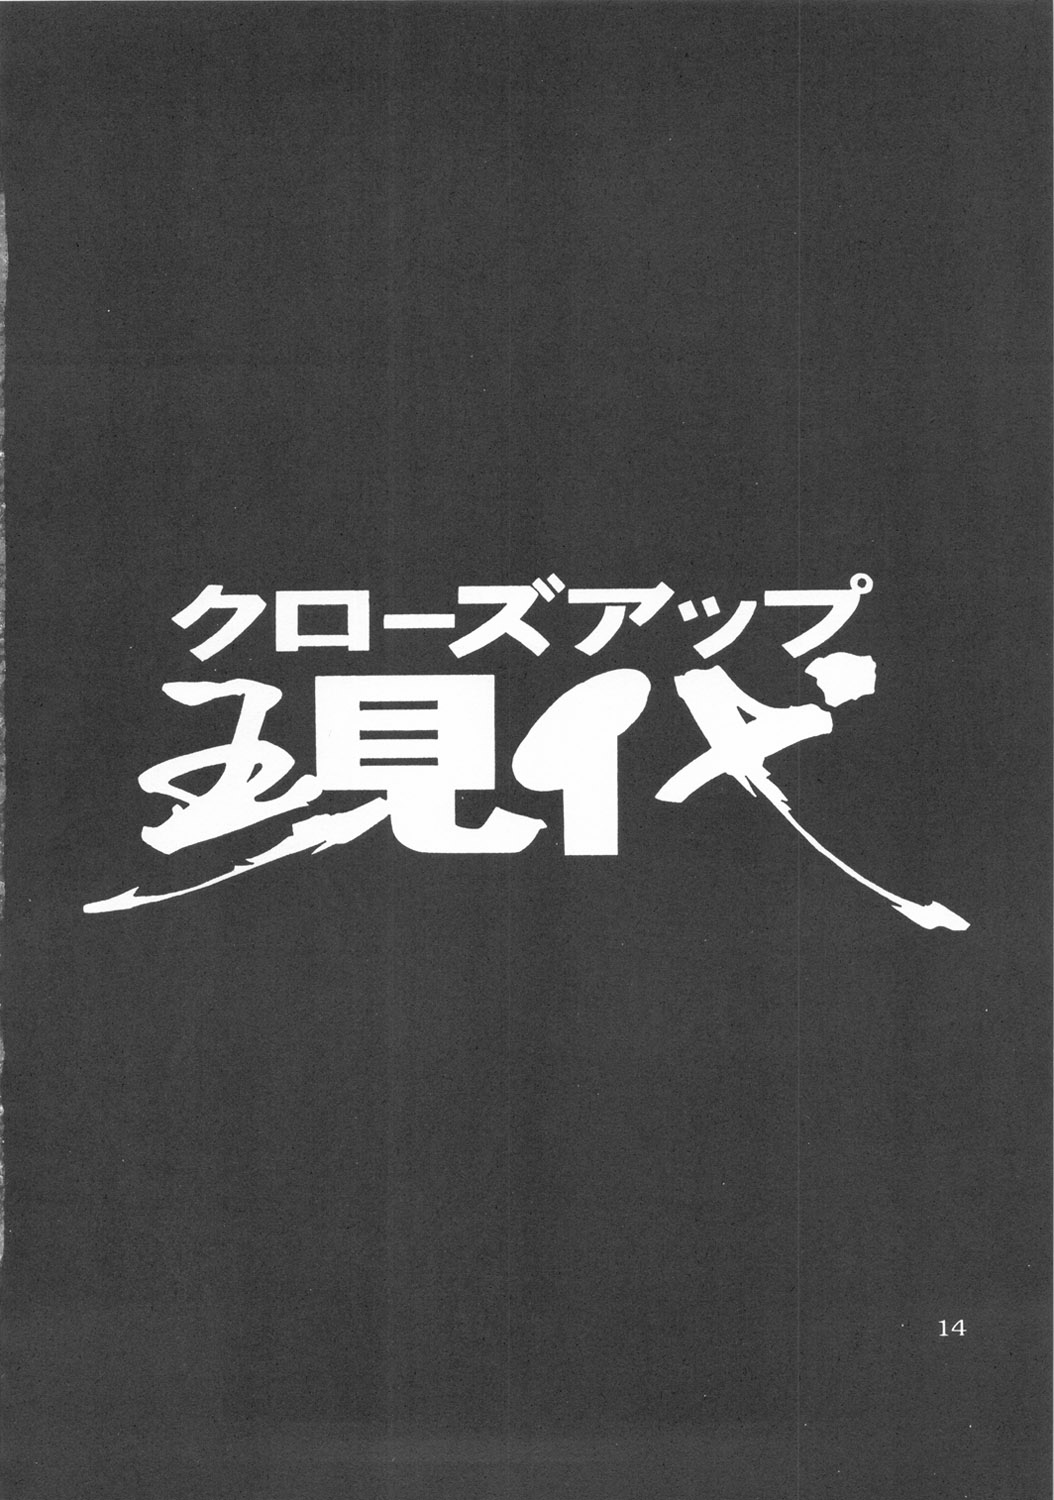 (C53) [日本H漫画協会 (NeWMeN、水無月十三)] クローズアップ現代 『創刊弐号』